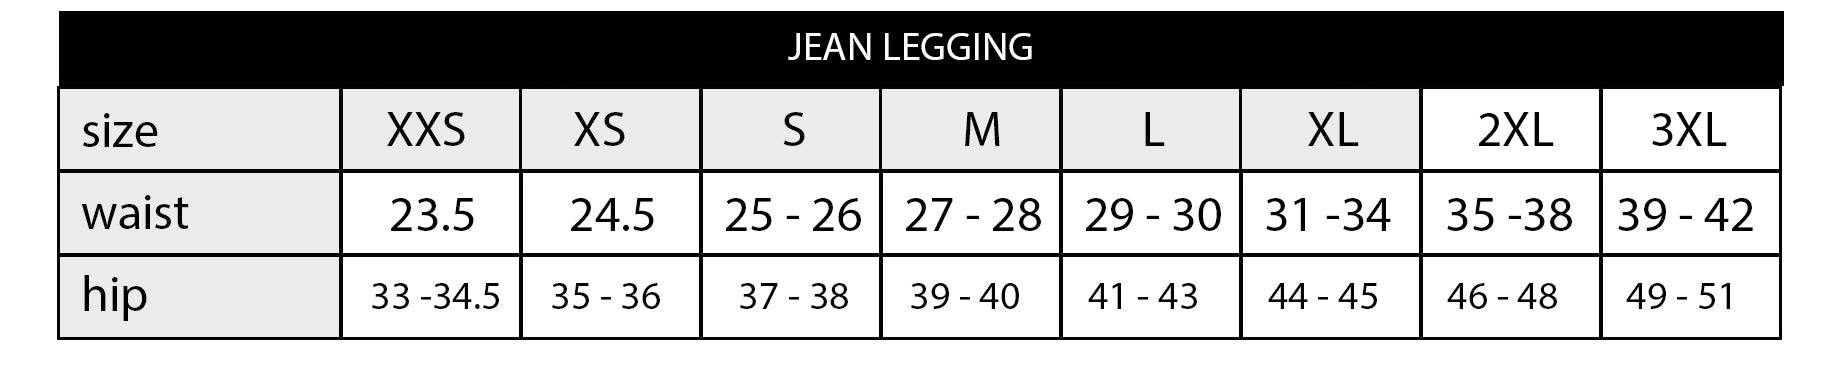 Women's jean legging size chart